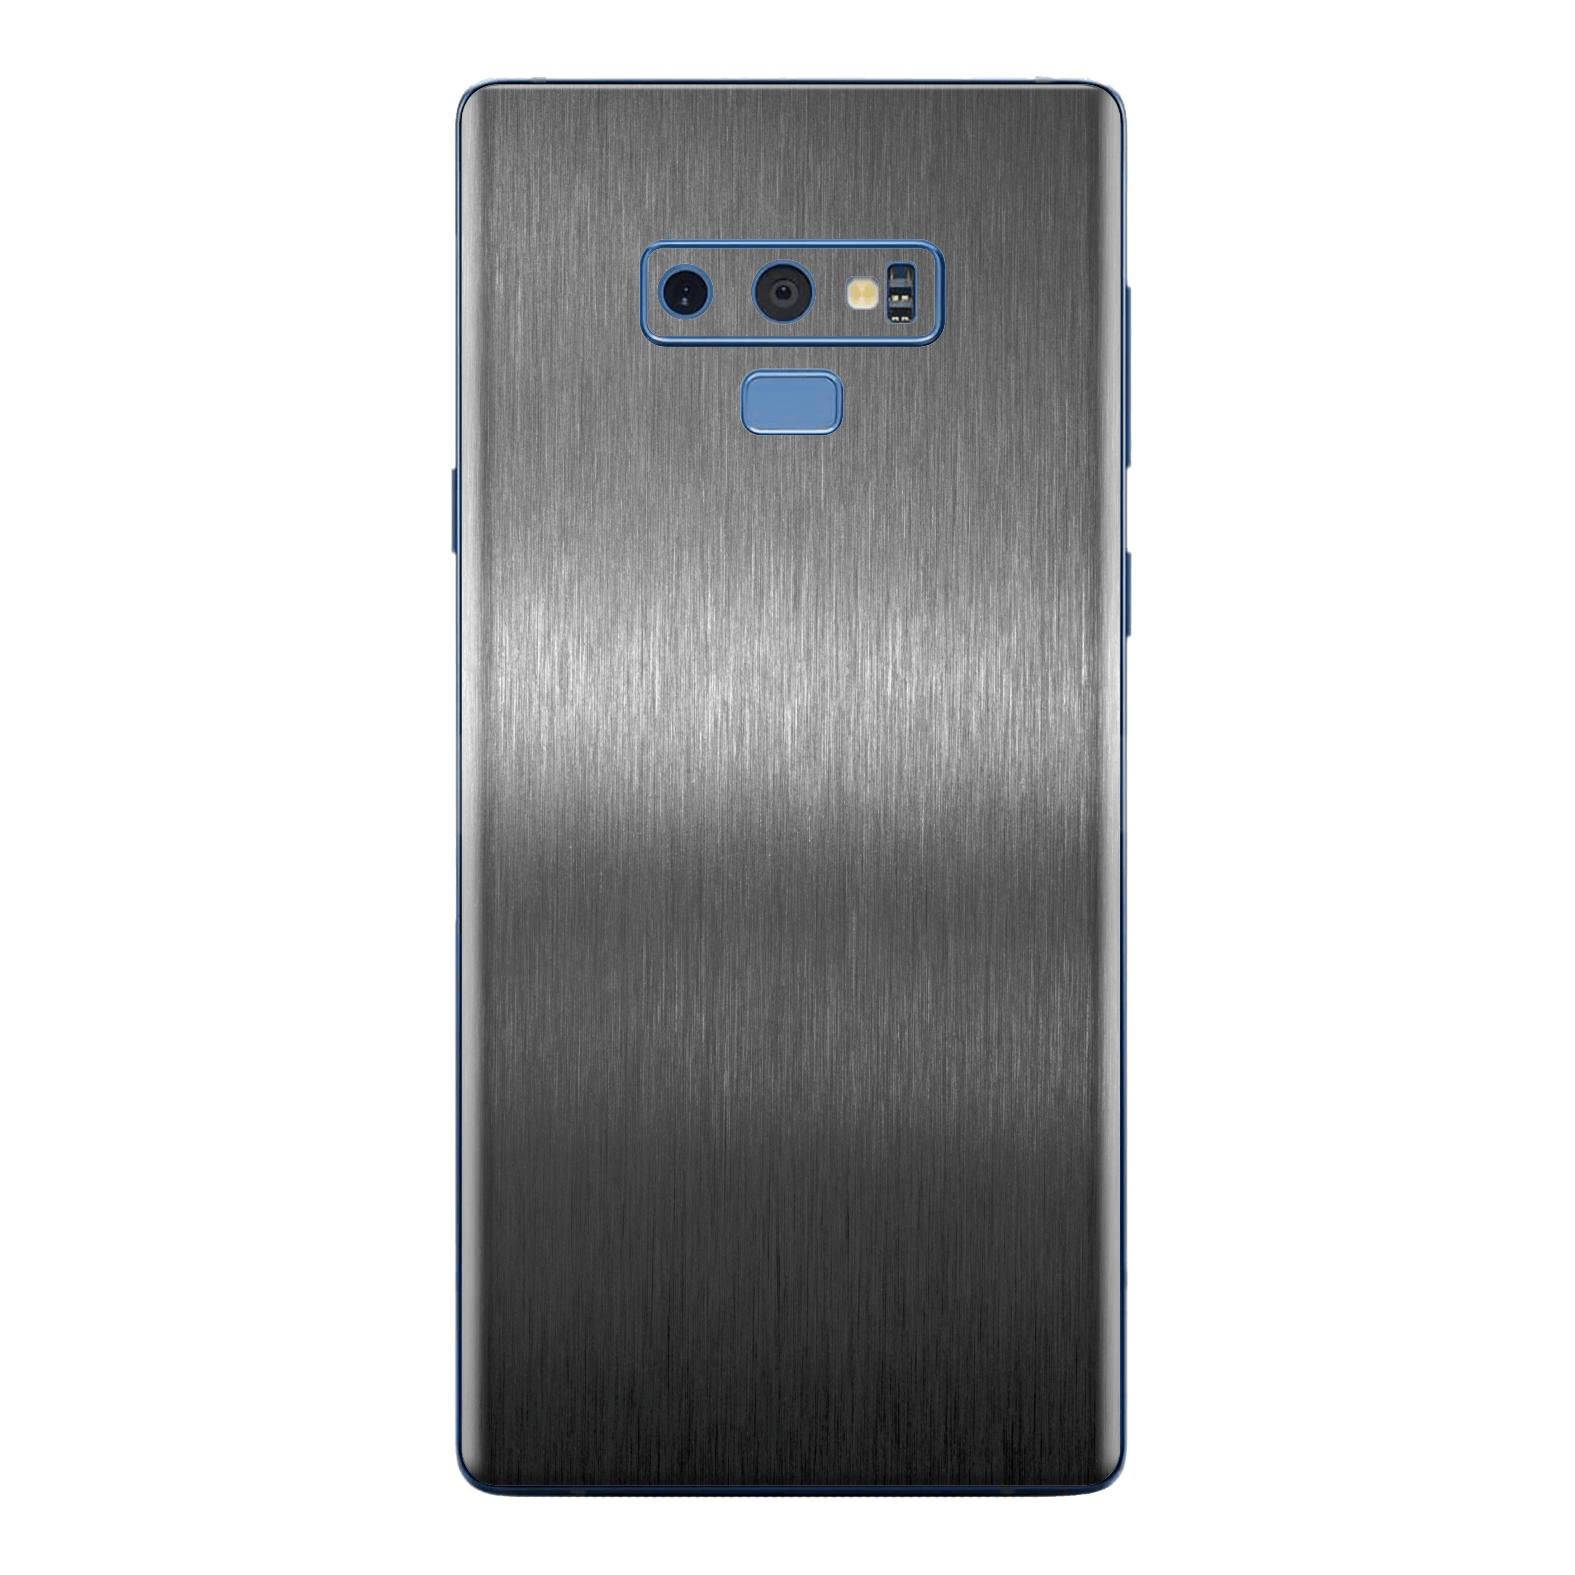 Samsung Galaxy NOTE 9 Brushed Metal Titanium Metallic Skin Wrap Sticker Decal Cover Protector by EasySkinz | EasySkinz.com